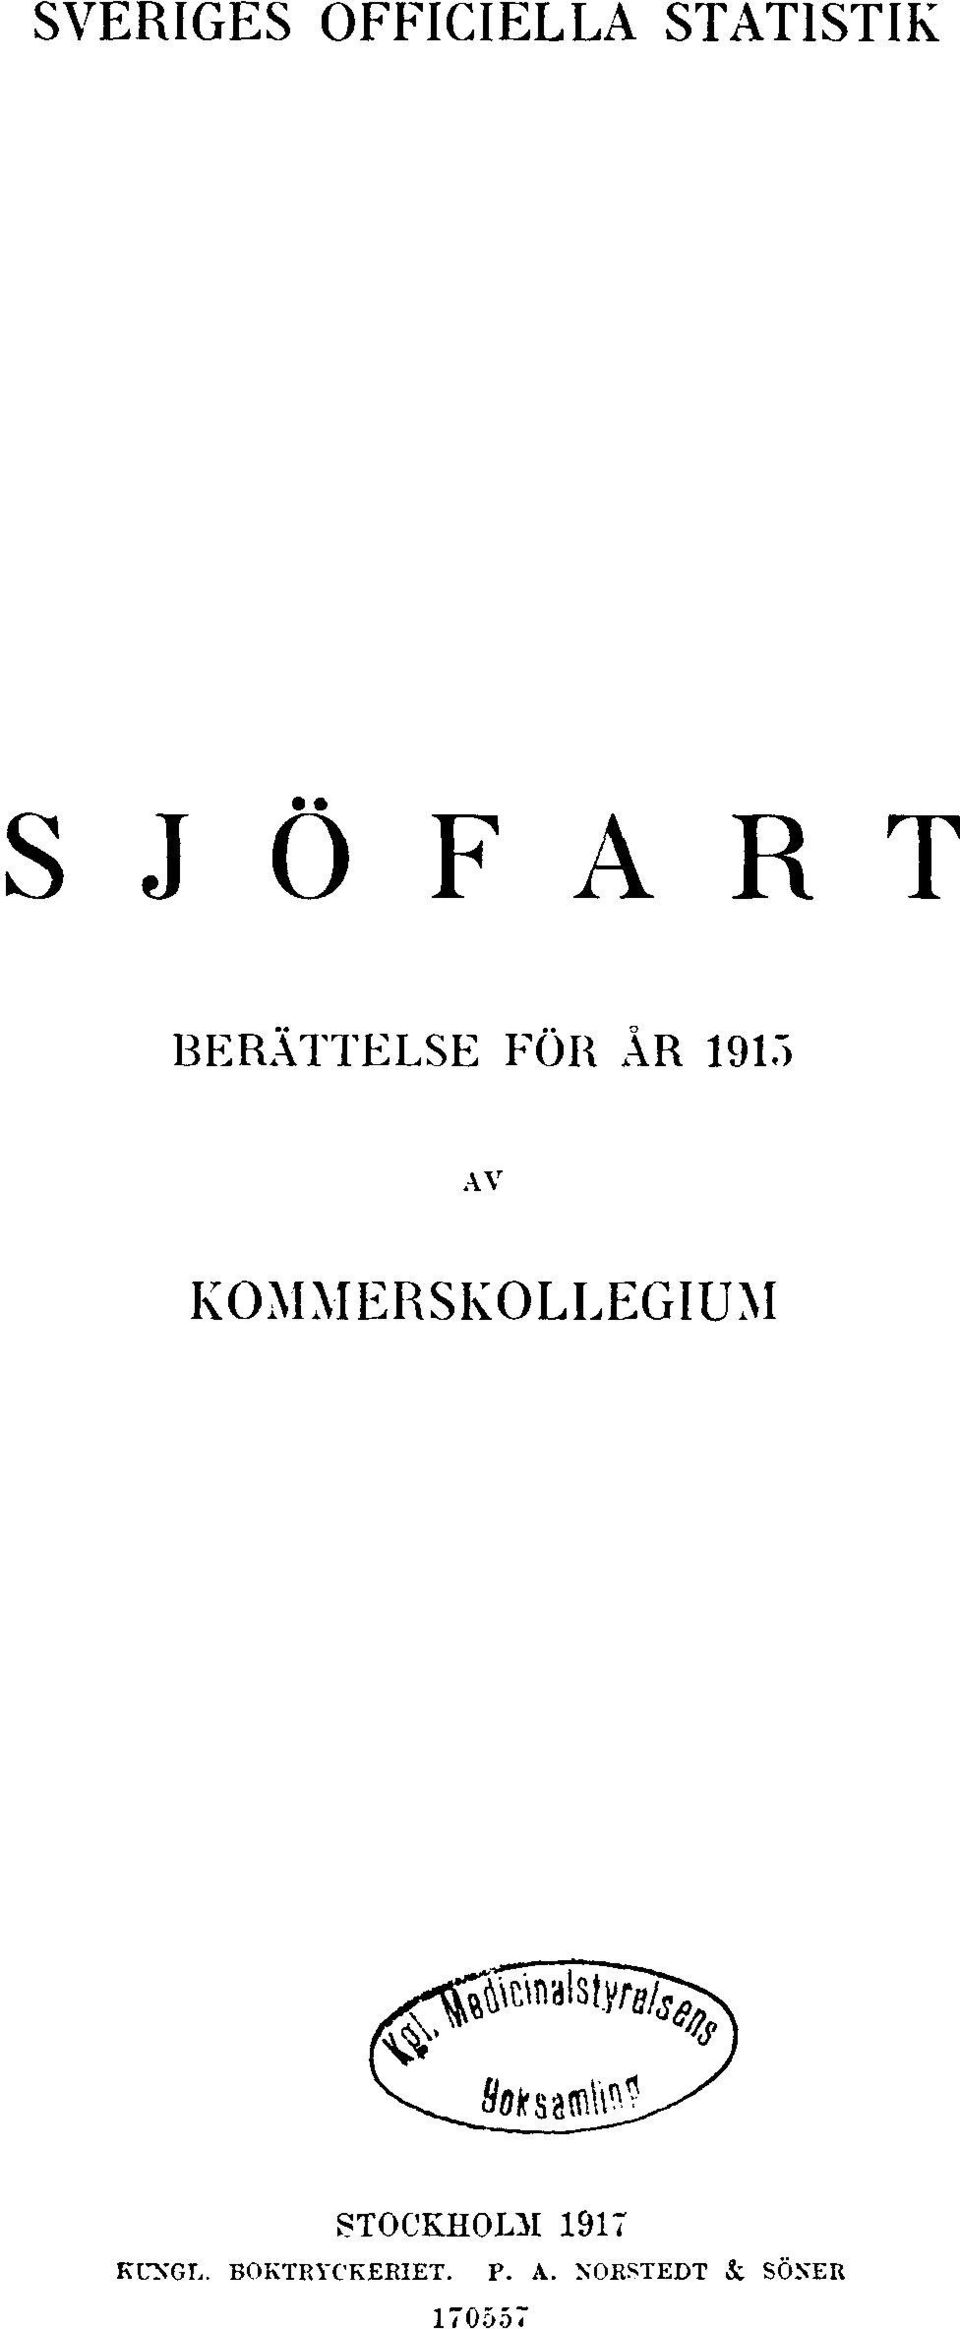 KOMMERSKOLLEGIUM STOCKHOLM 1917